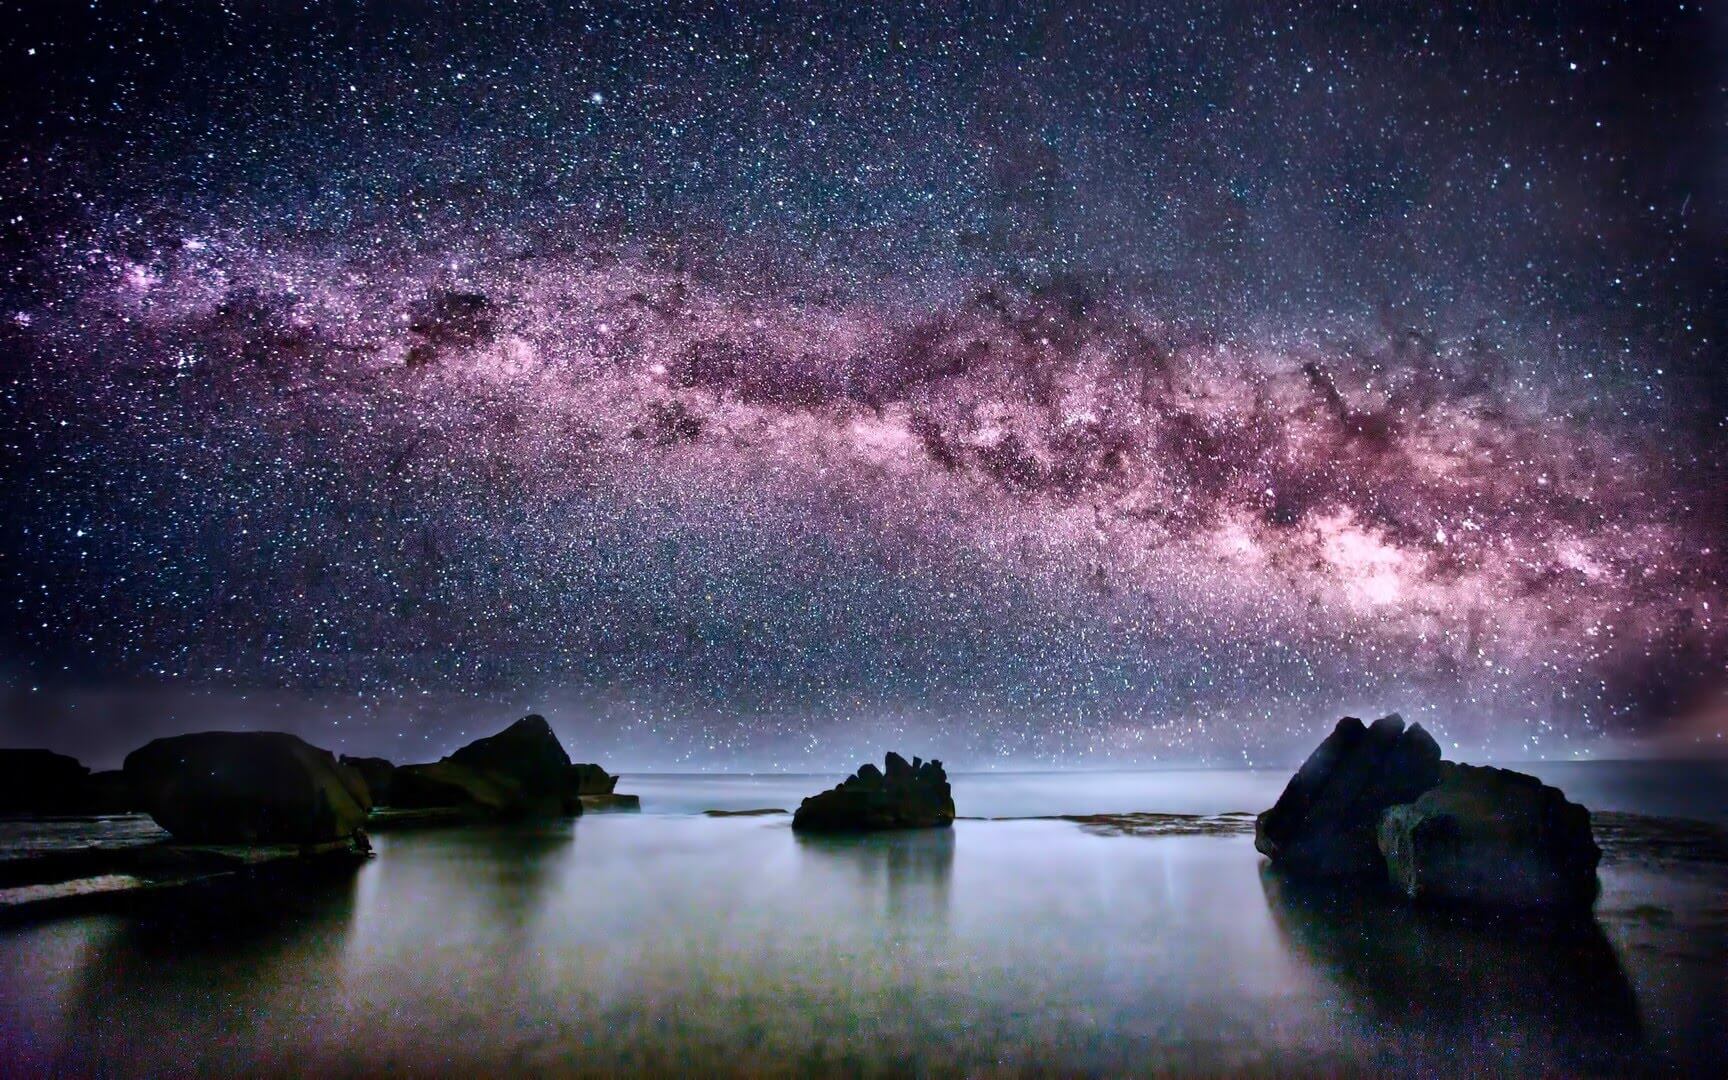 Inside the Milky Way